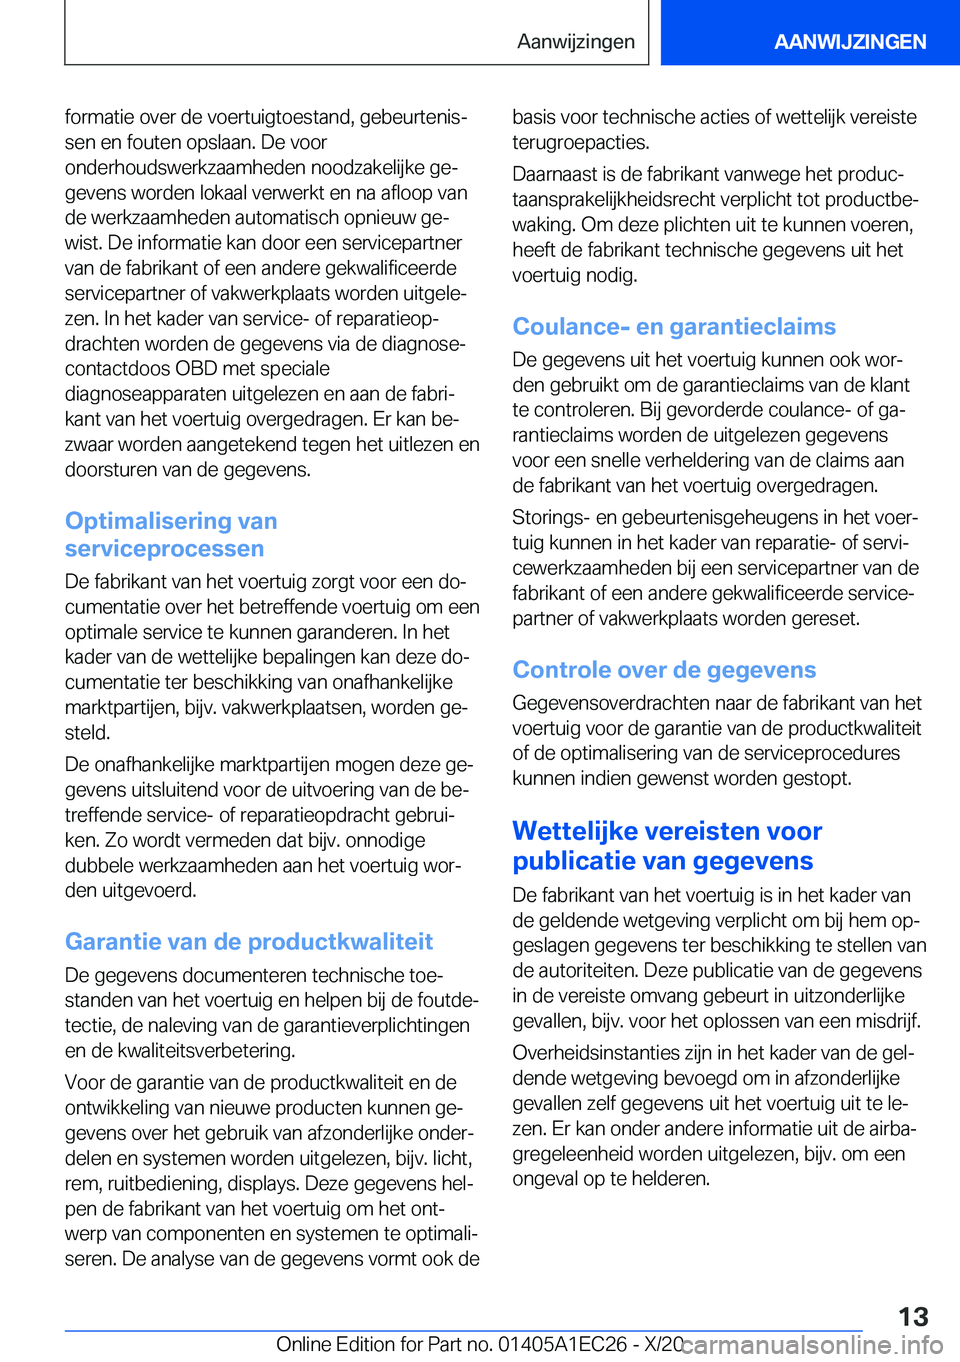 BMW 8 SERIES GRAN COUPE 2021  Instructieboekjes (in Dutch) �f�o�r�m�a�t�i�e��o�v�e�r��d�e��v�o�e�r�t�u�i�g�t�o�e�s�t�a�n�d�,��g�e�b�e�u�r�t�e�n�i�sj�s�e�n��e�n��f�o�u�t�e�n��o�p�s�l�a�a�n�.��D�e��v�o�o�r
�o�n�d�e�r�h�o�u�d�s�w�e�r�k�z�a�a�m�h�e�d�e�